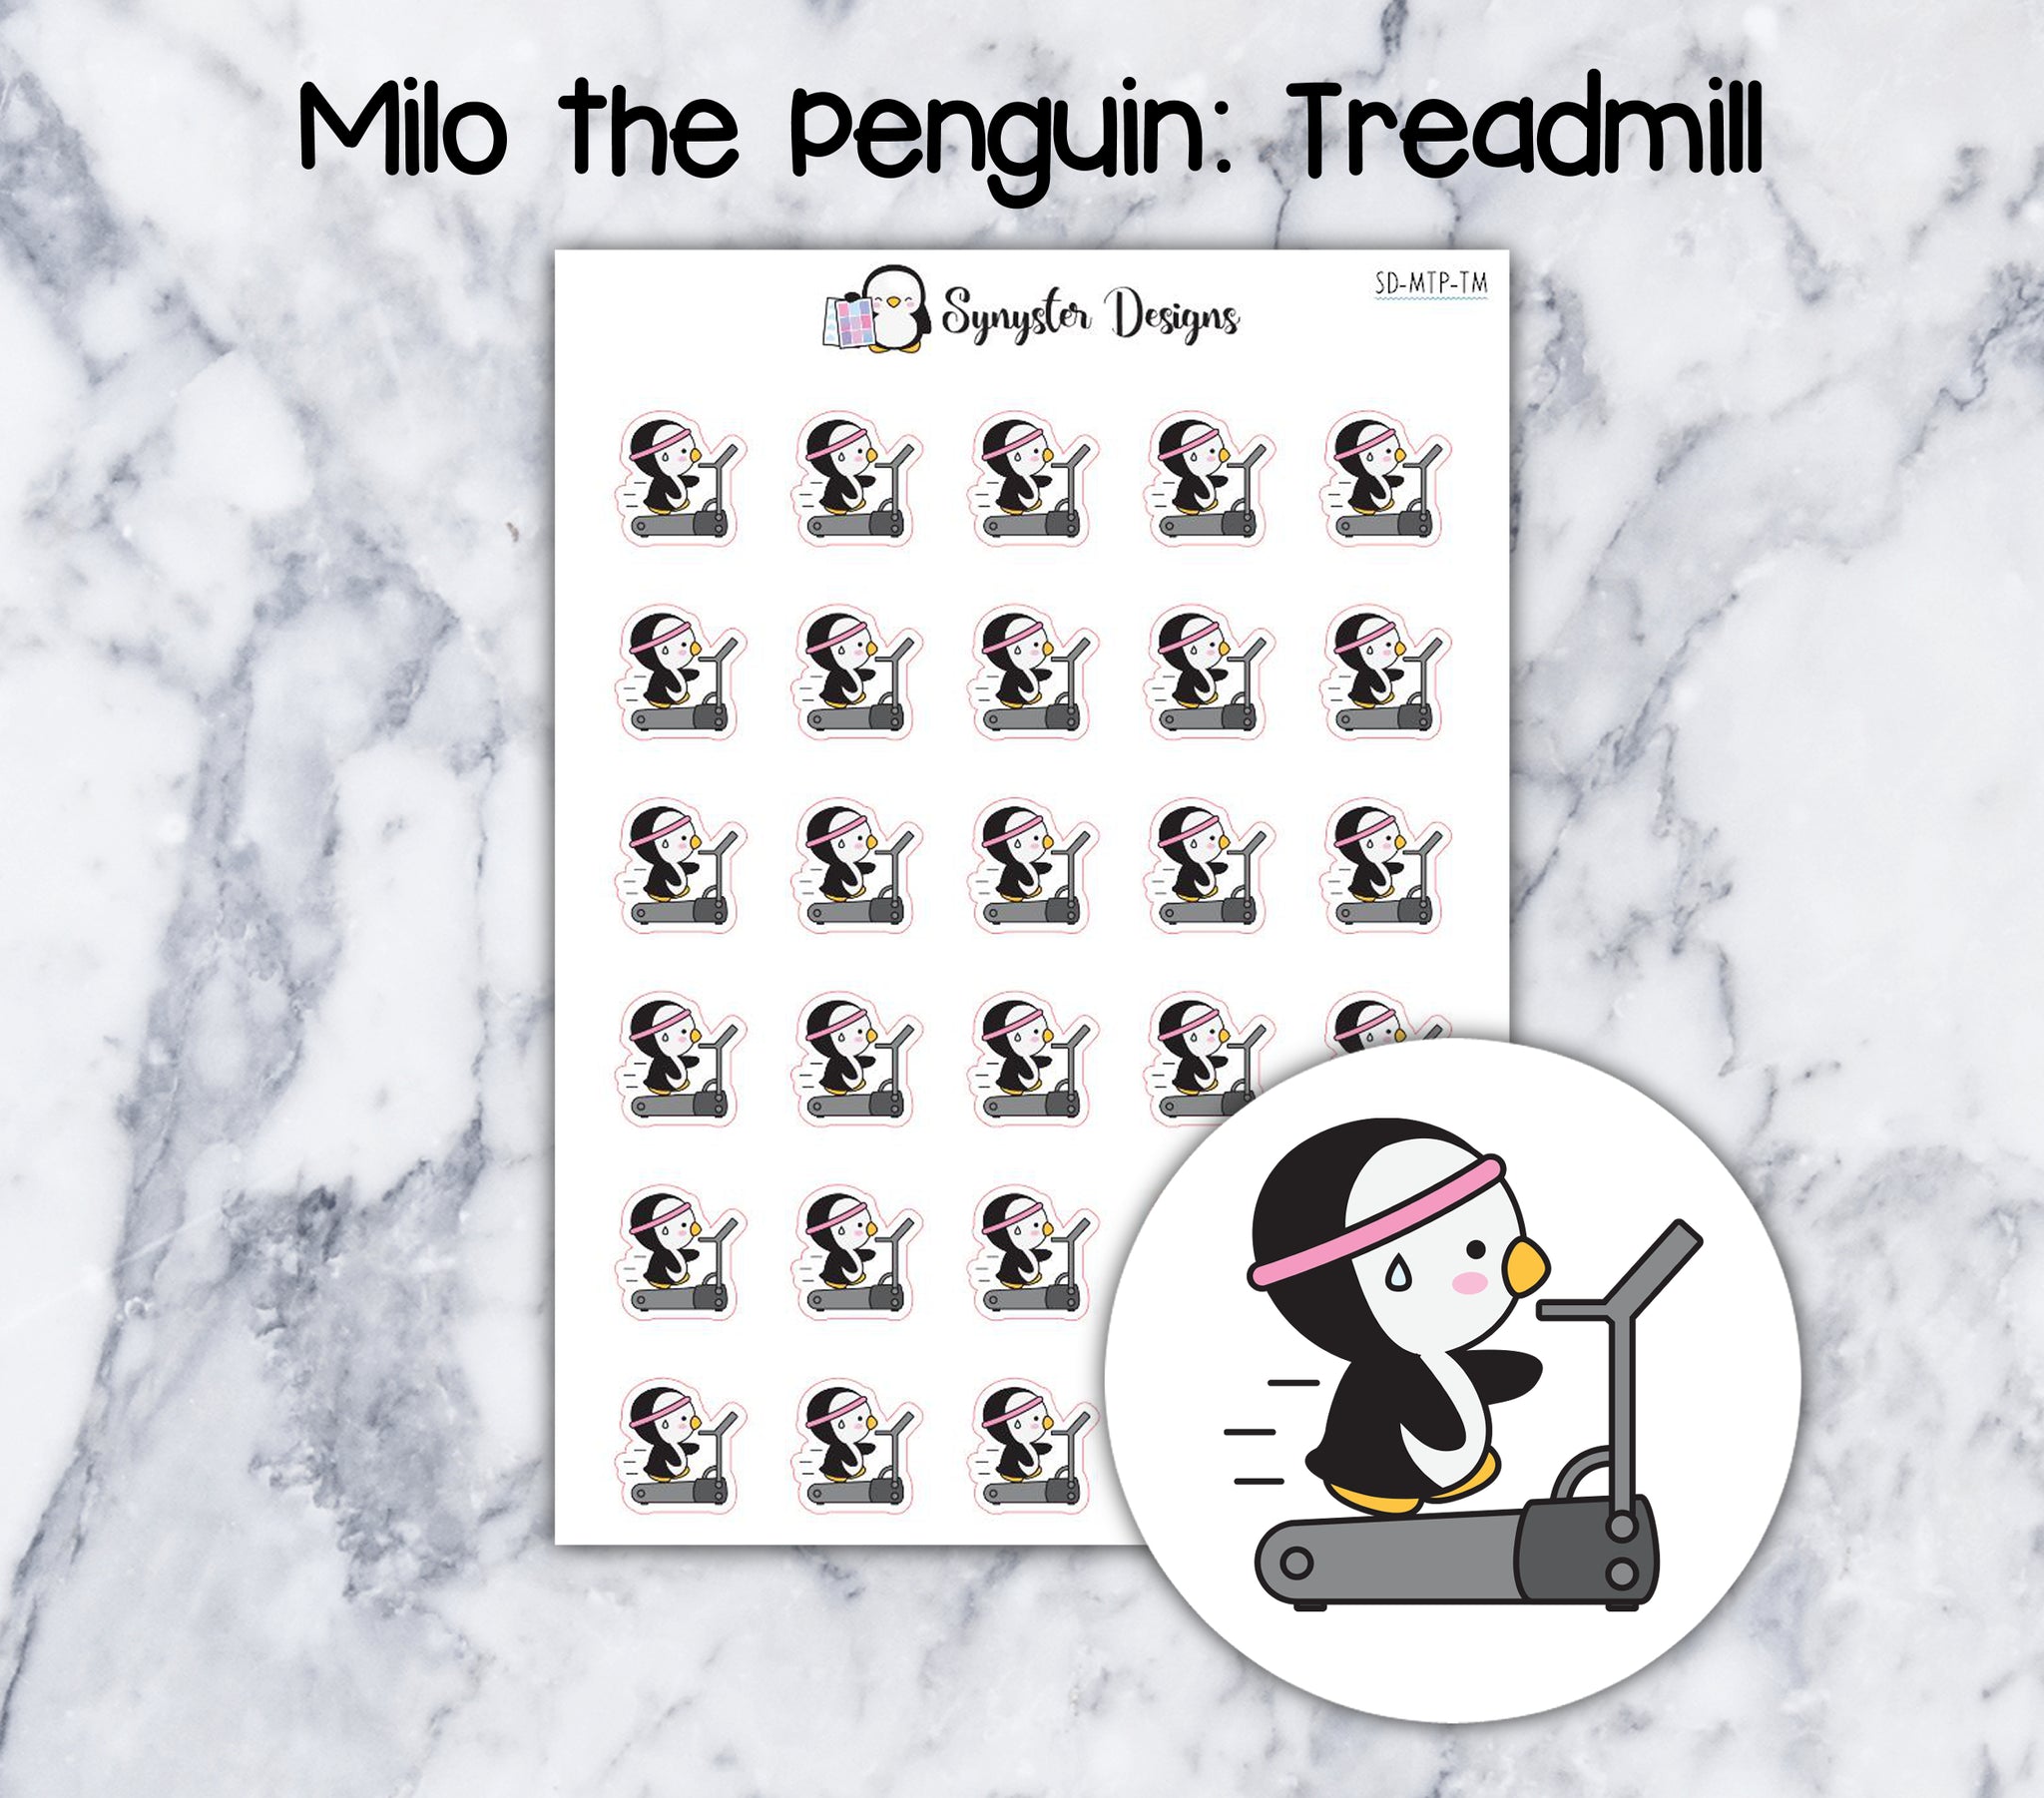 Treadmill Milo the Penguin